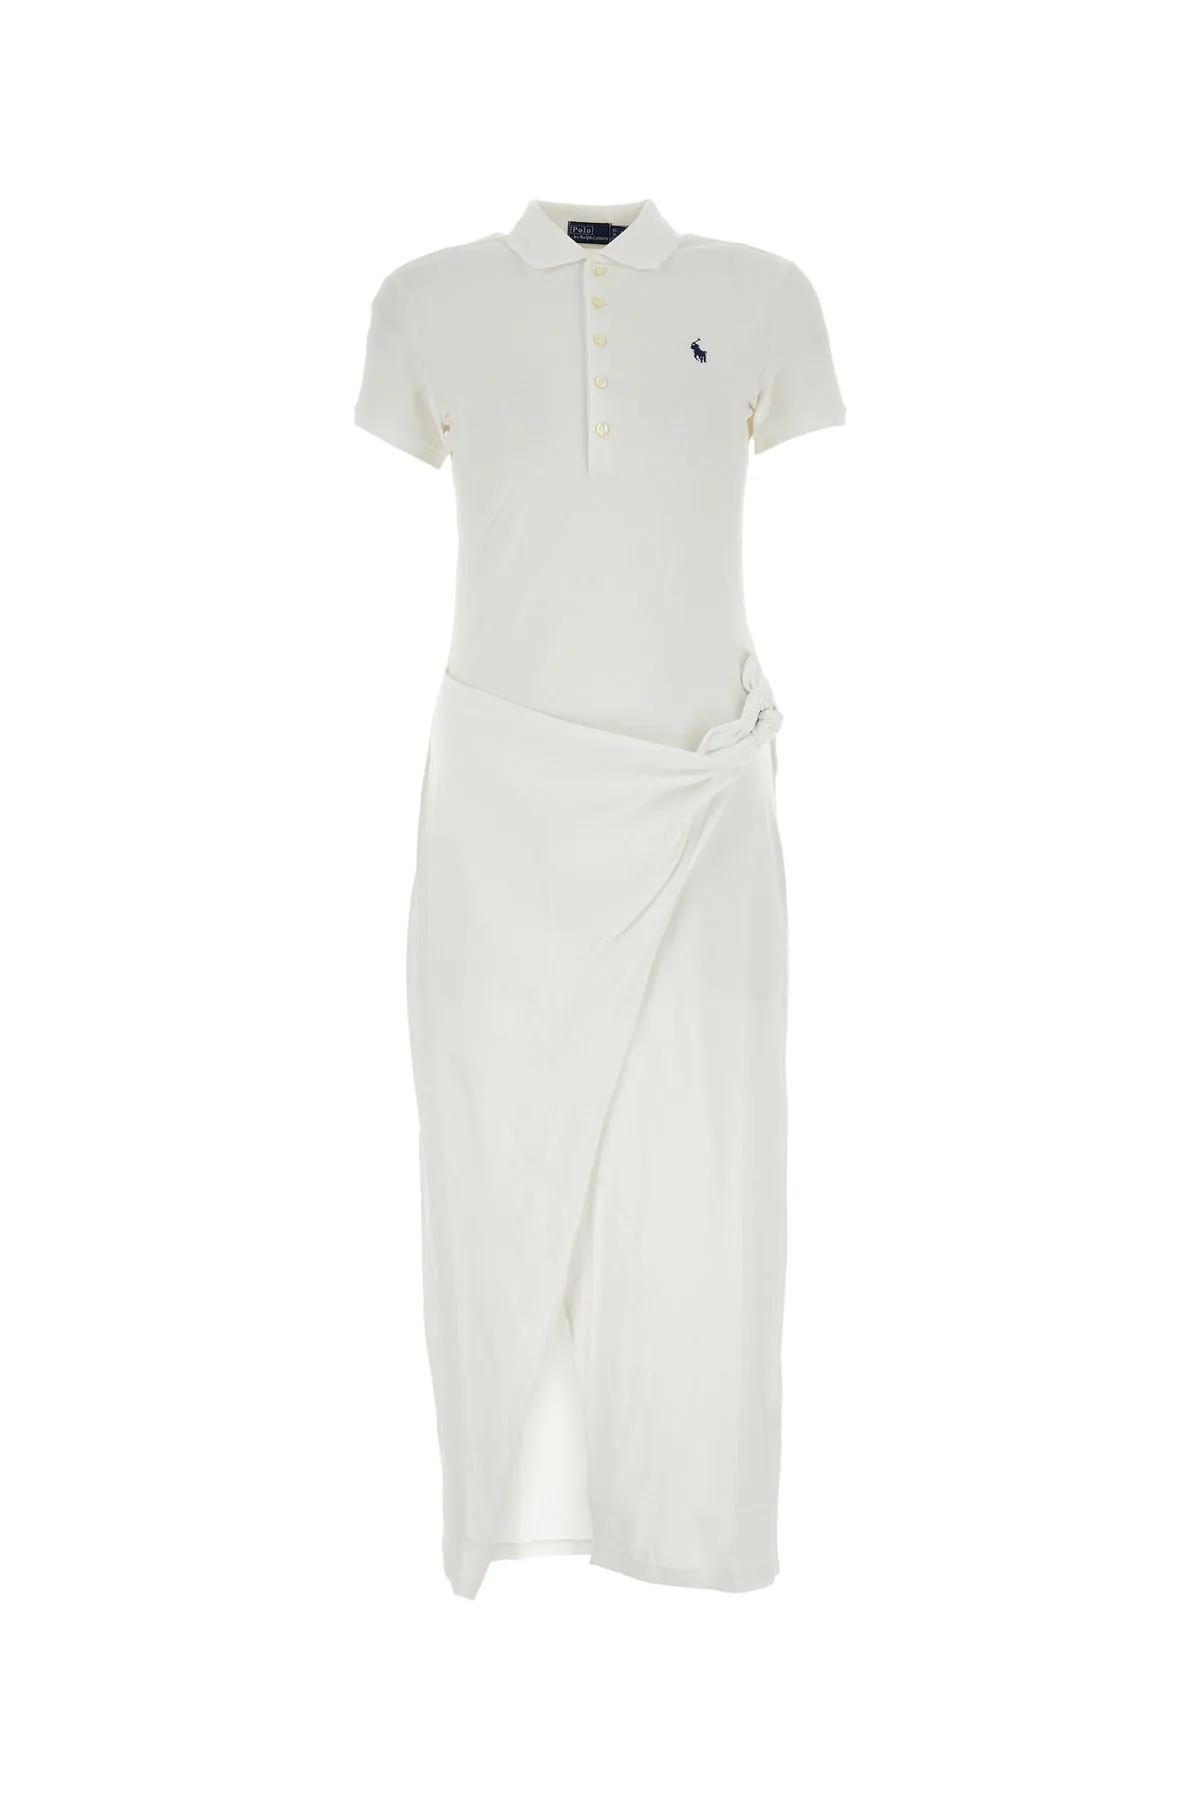 Shop Polo Ralph Lauren White Stretch Piquet Polo Dress